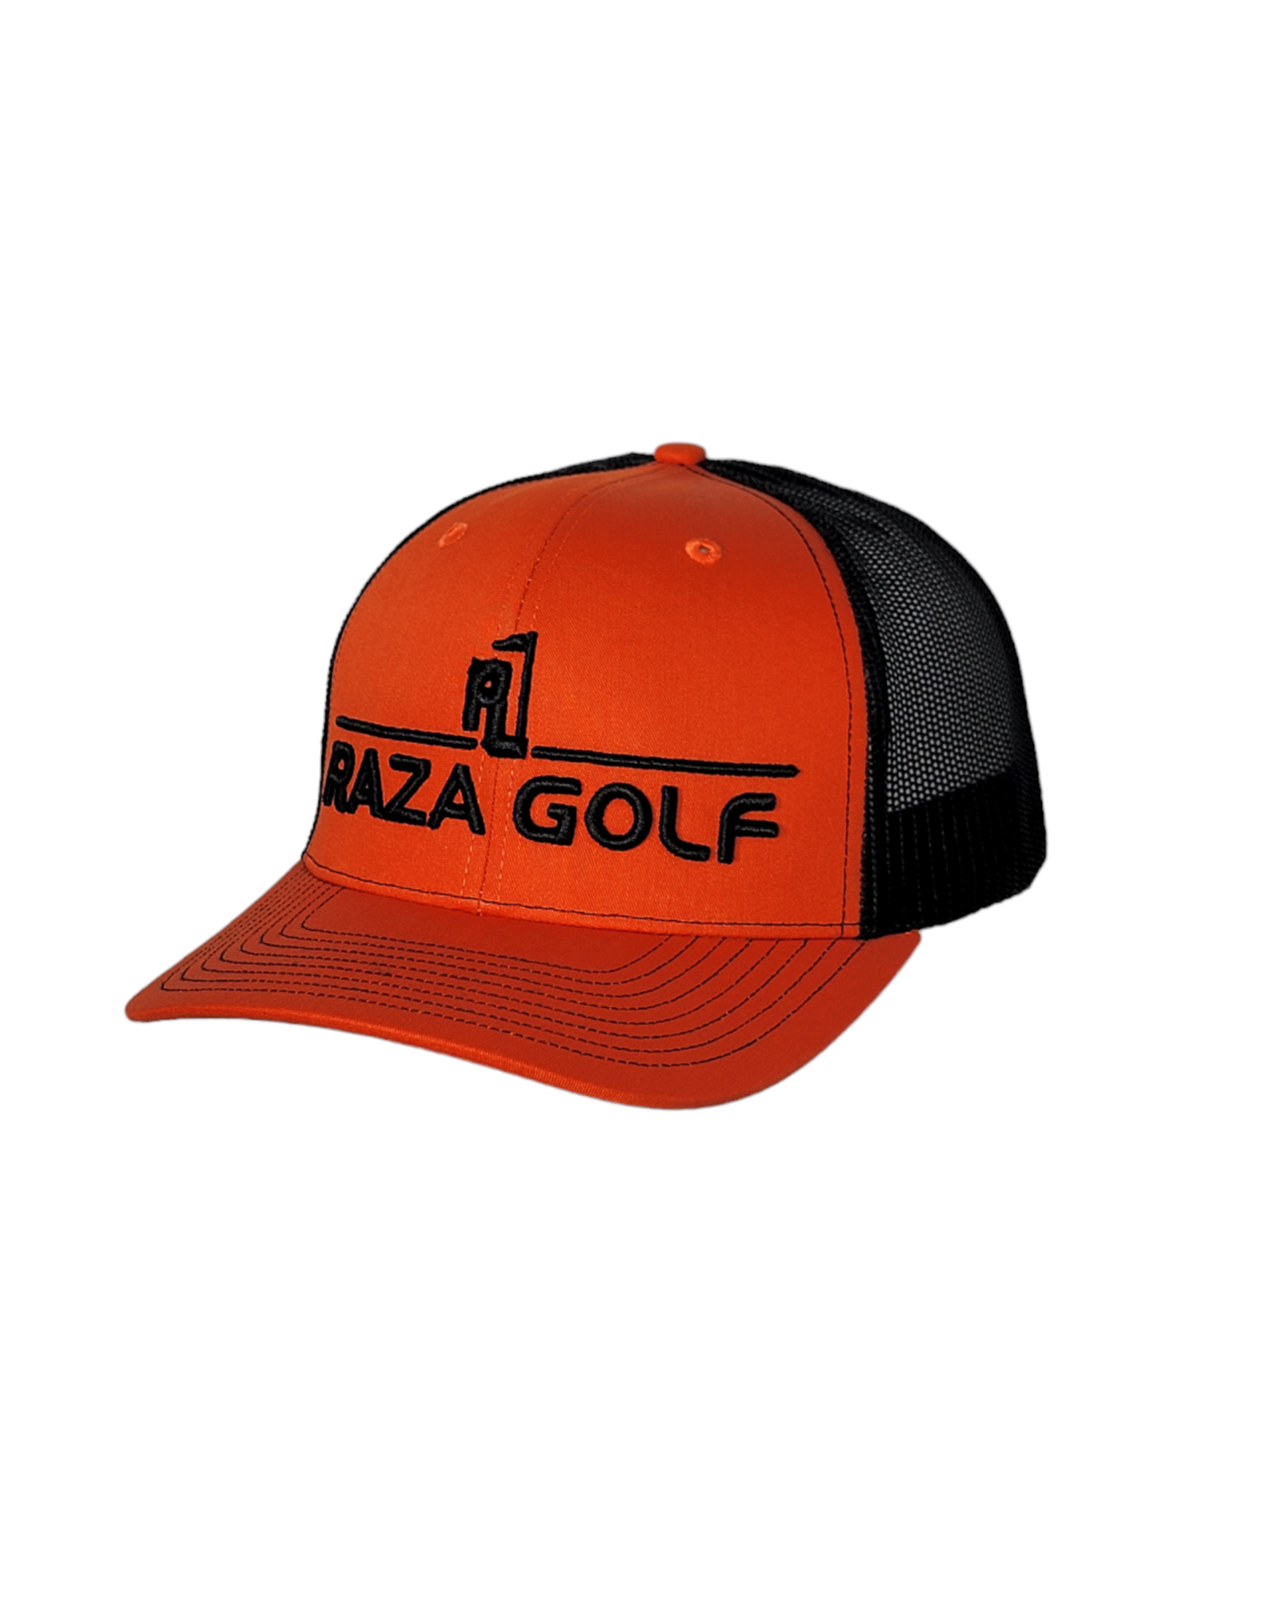 Raza Golf Orange/Black Linear Trucker Hat